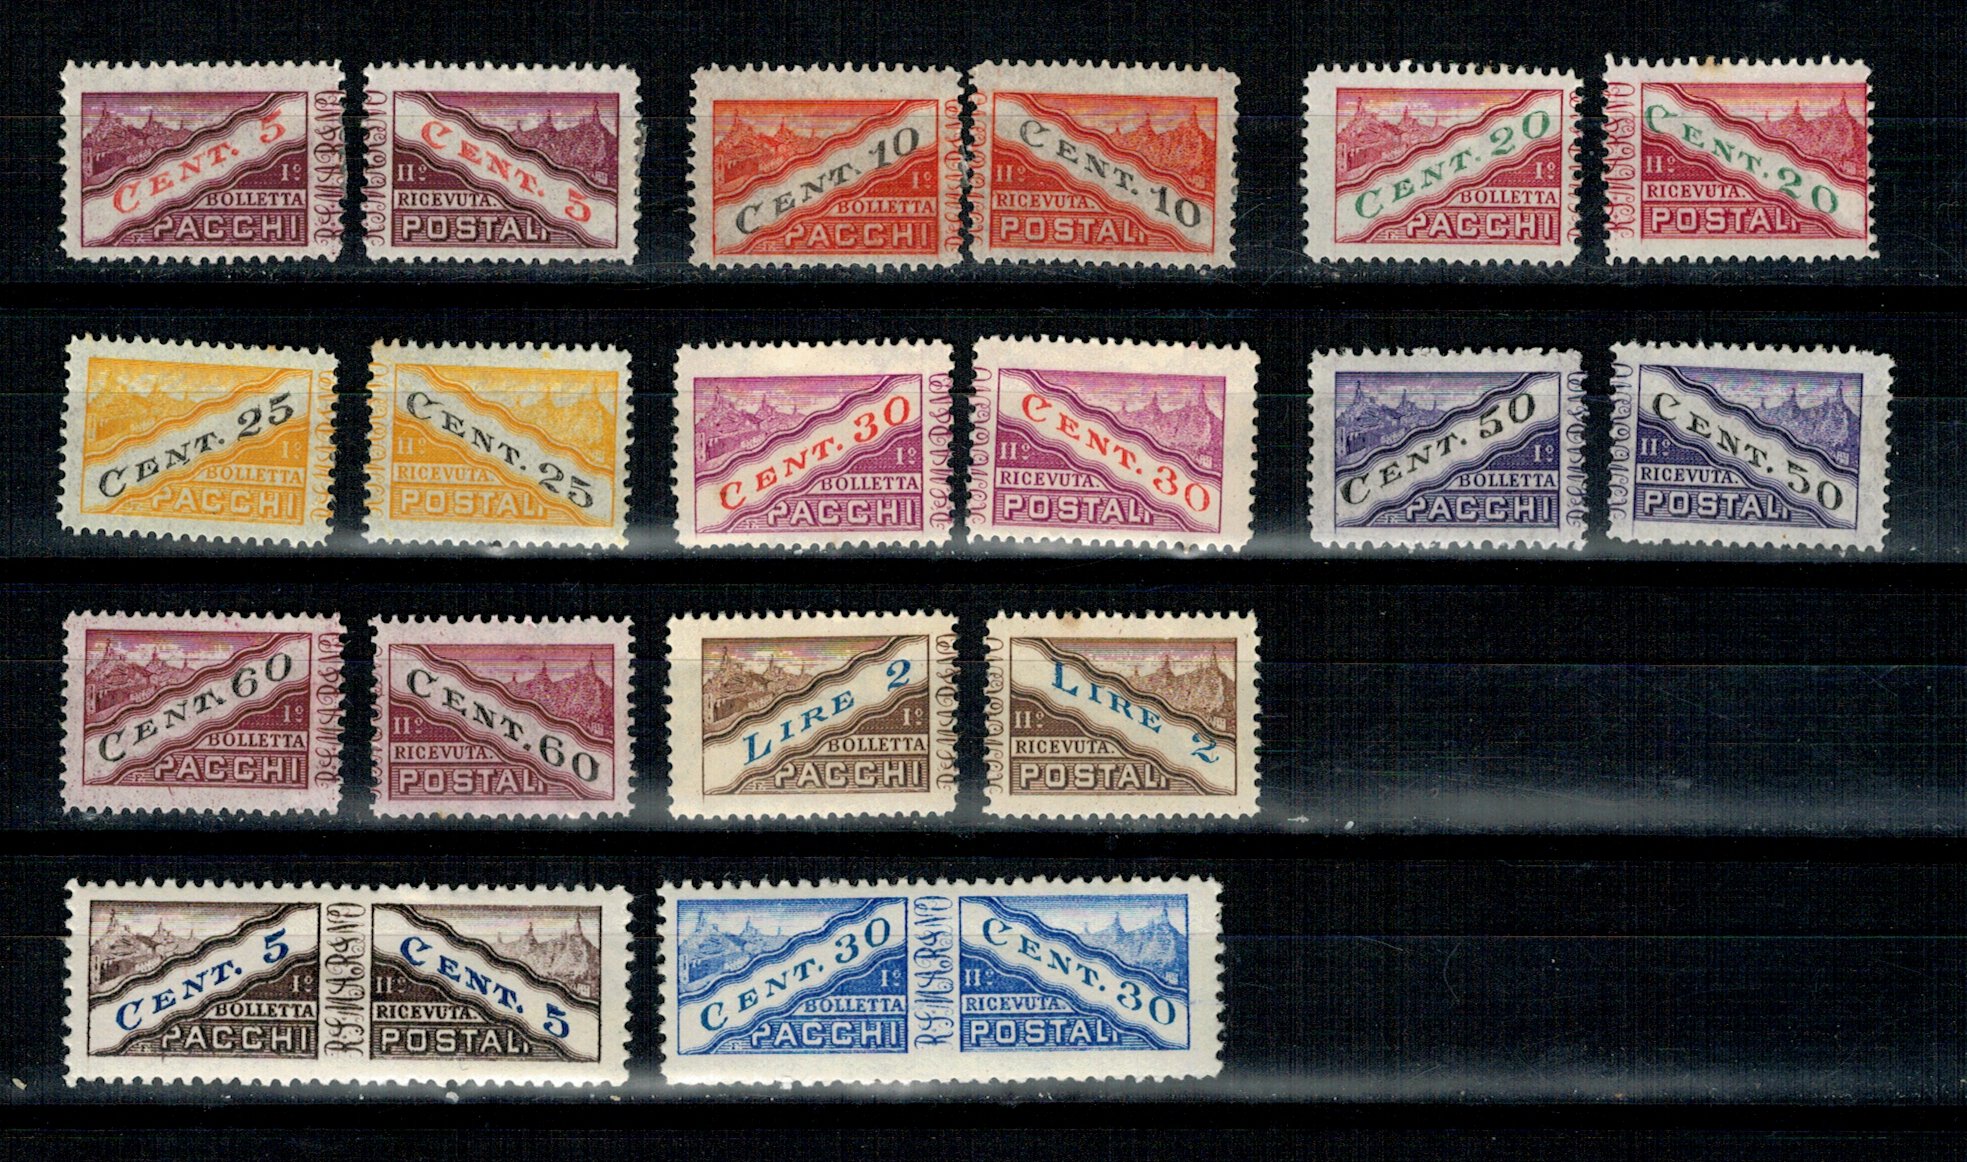 San Marino 1928-1945 - Colete postale, lot marci nestampilate